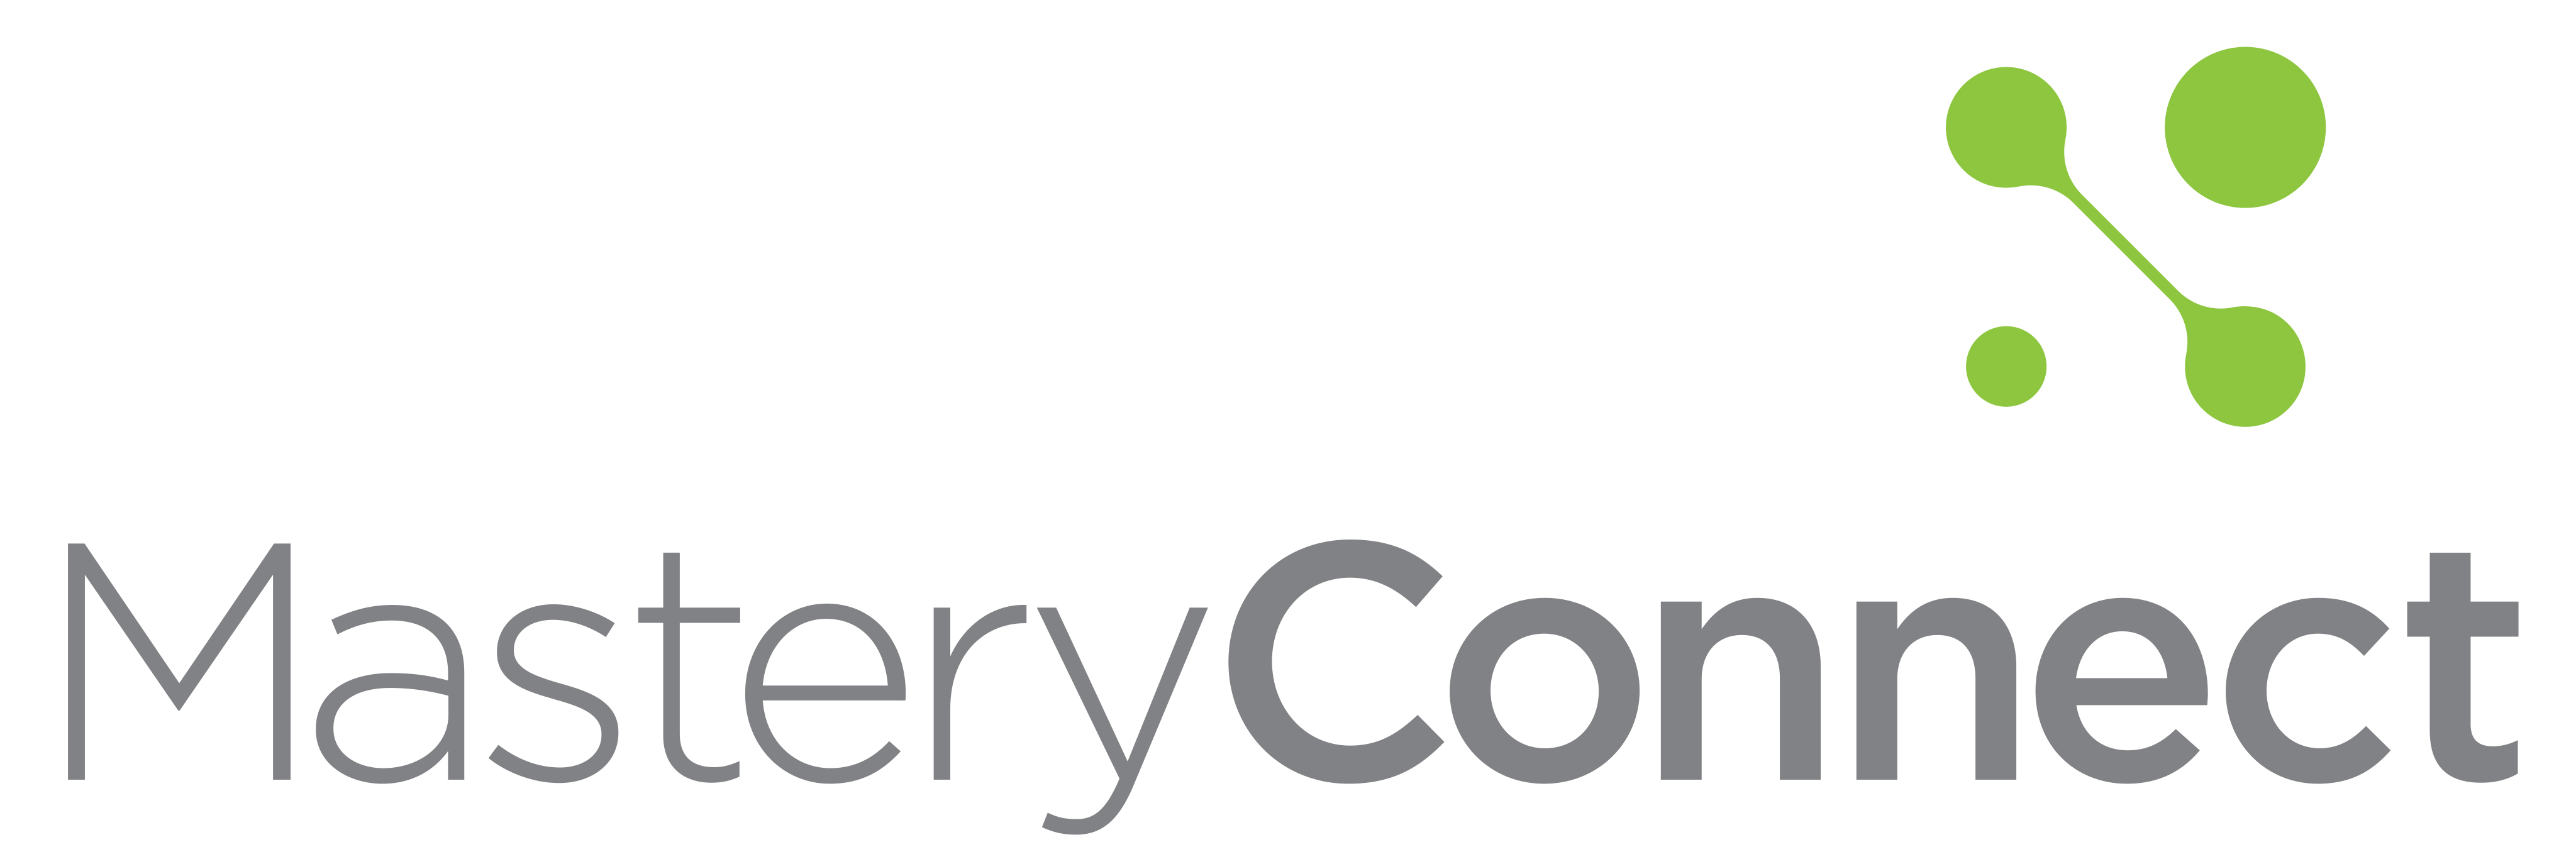 Mastery Connect logo